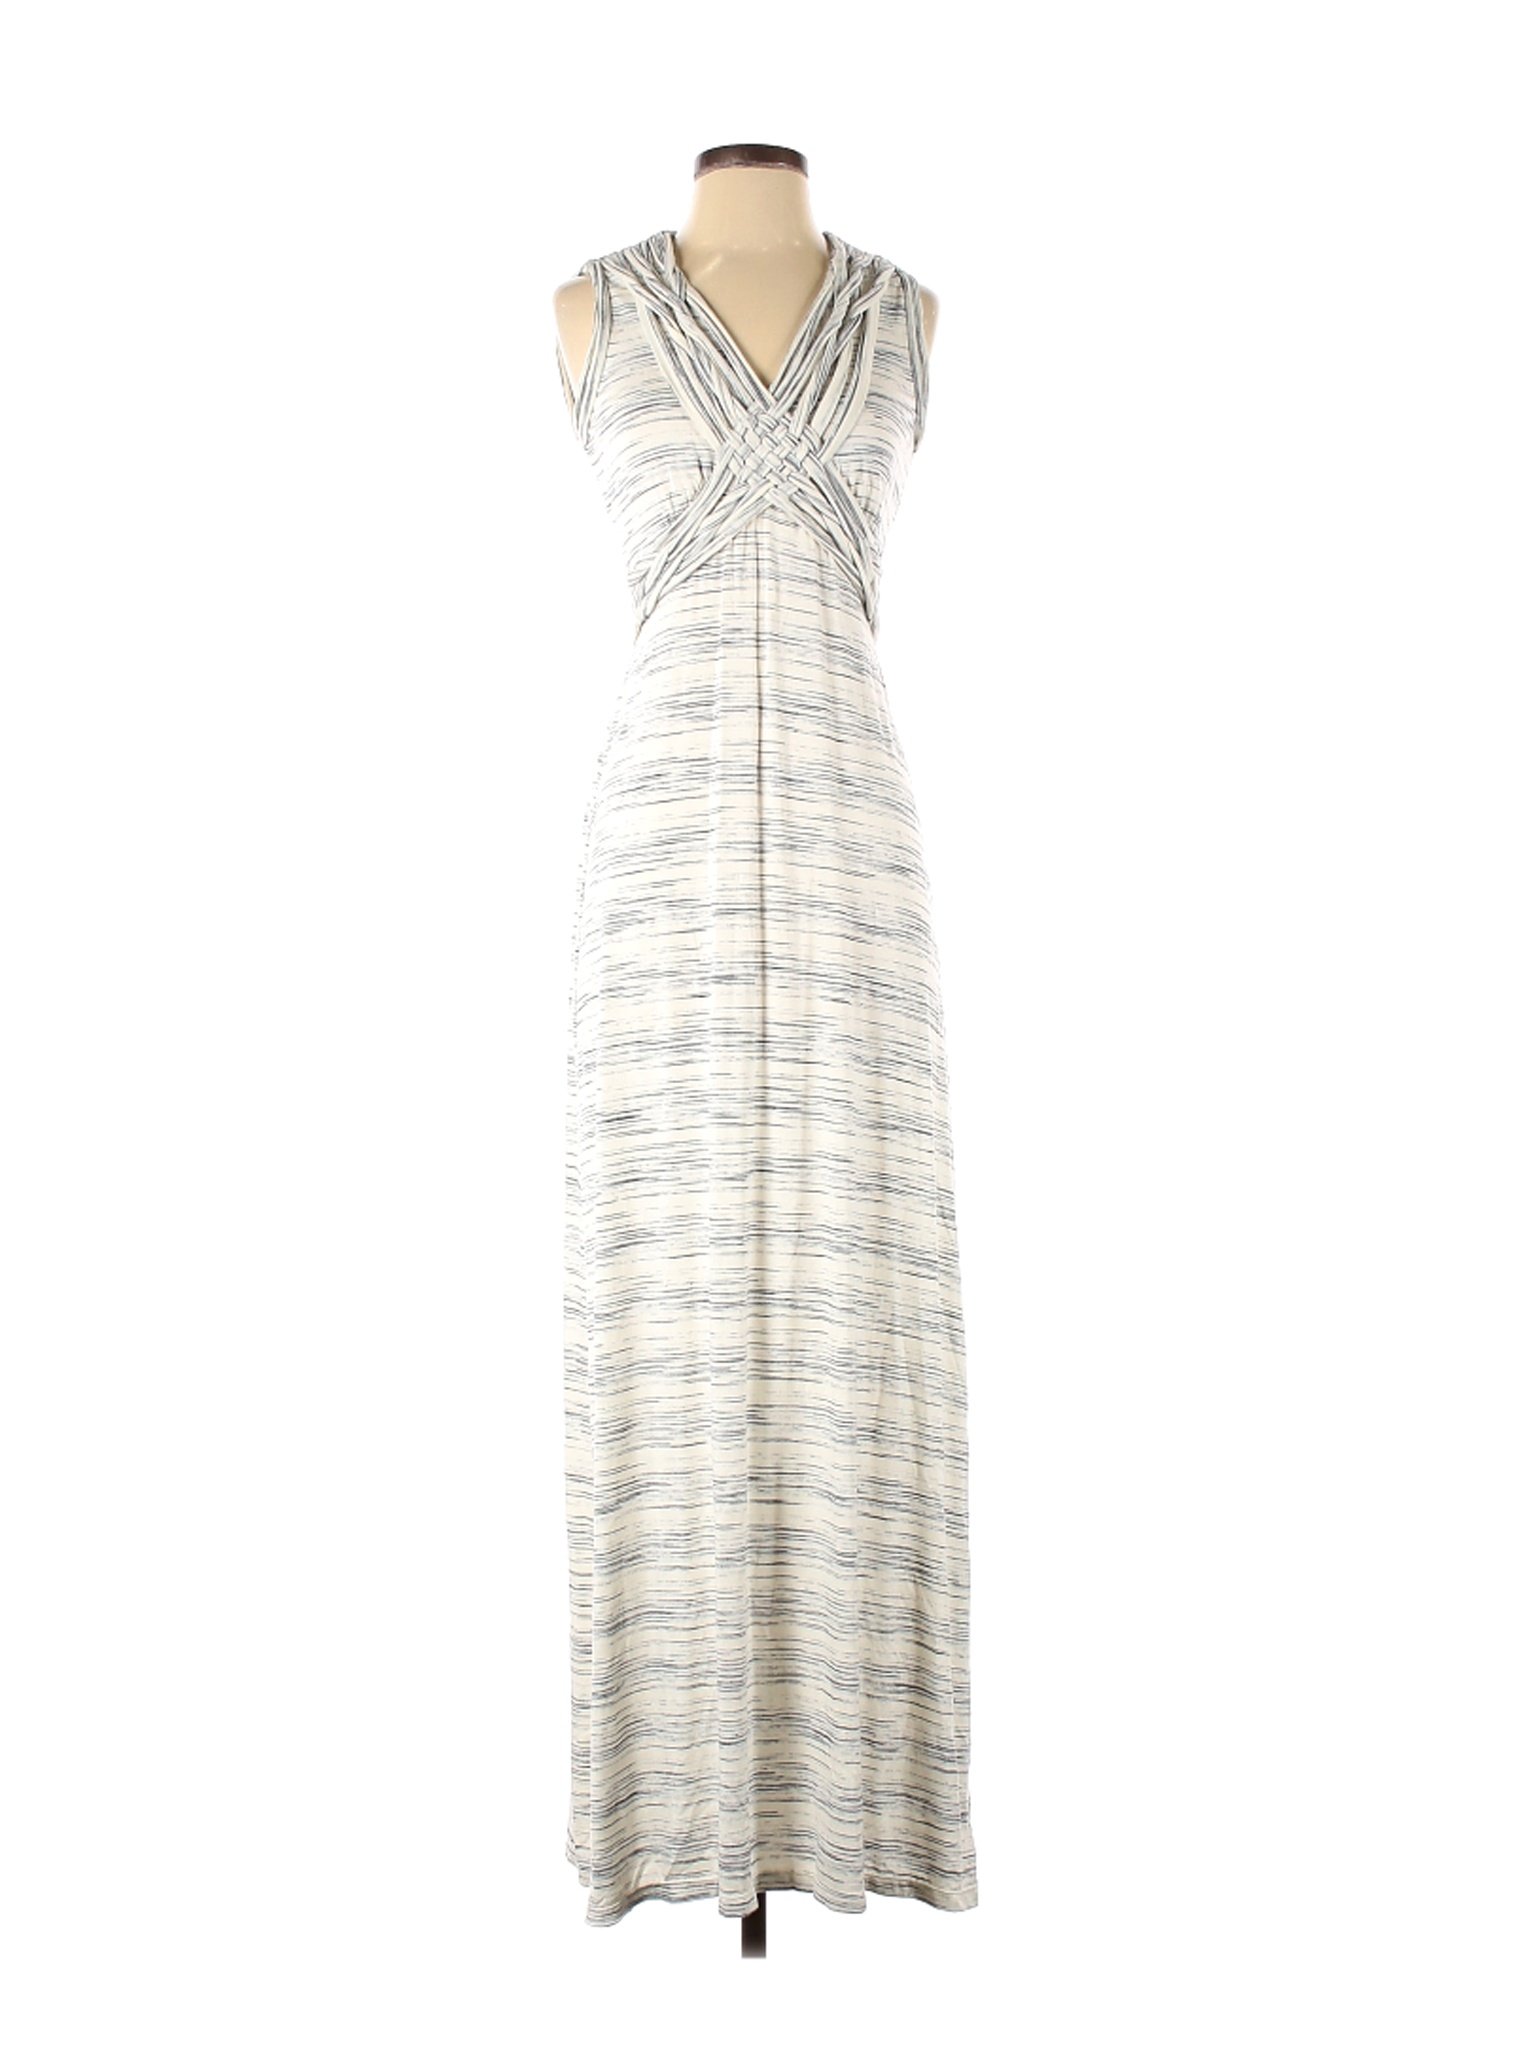 Max Studio Women White Casual Dress S | eBay